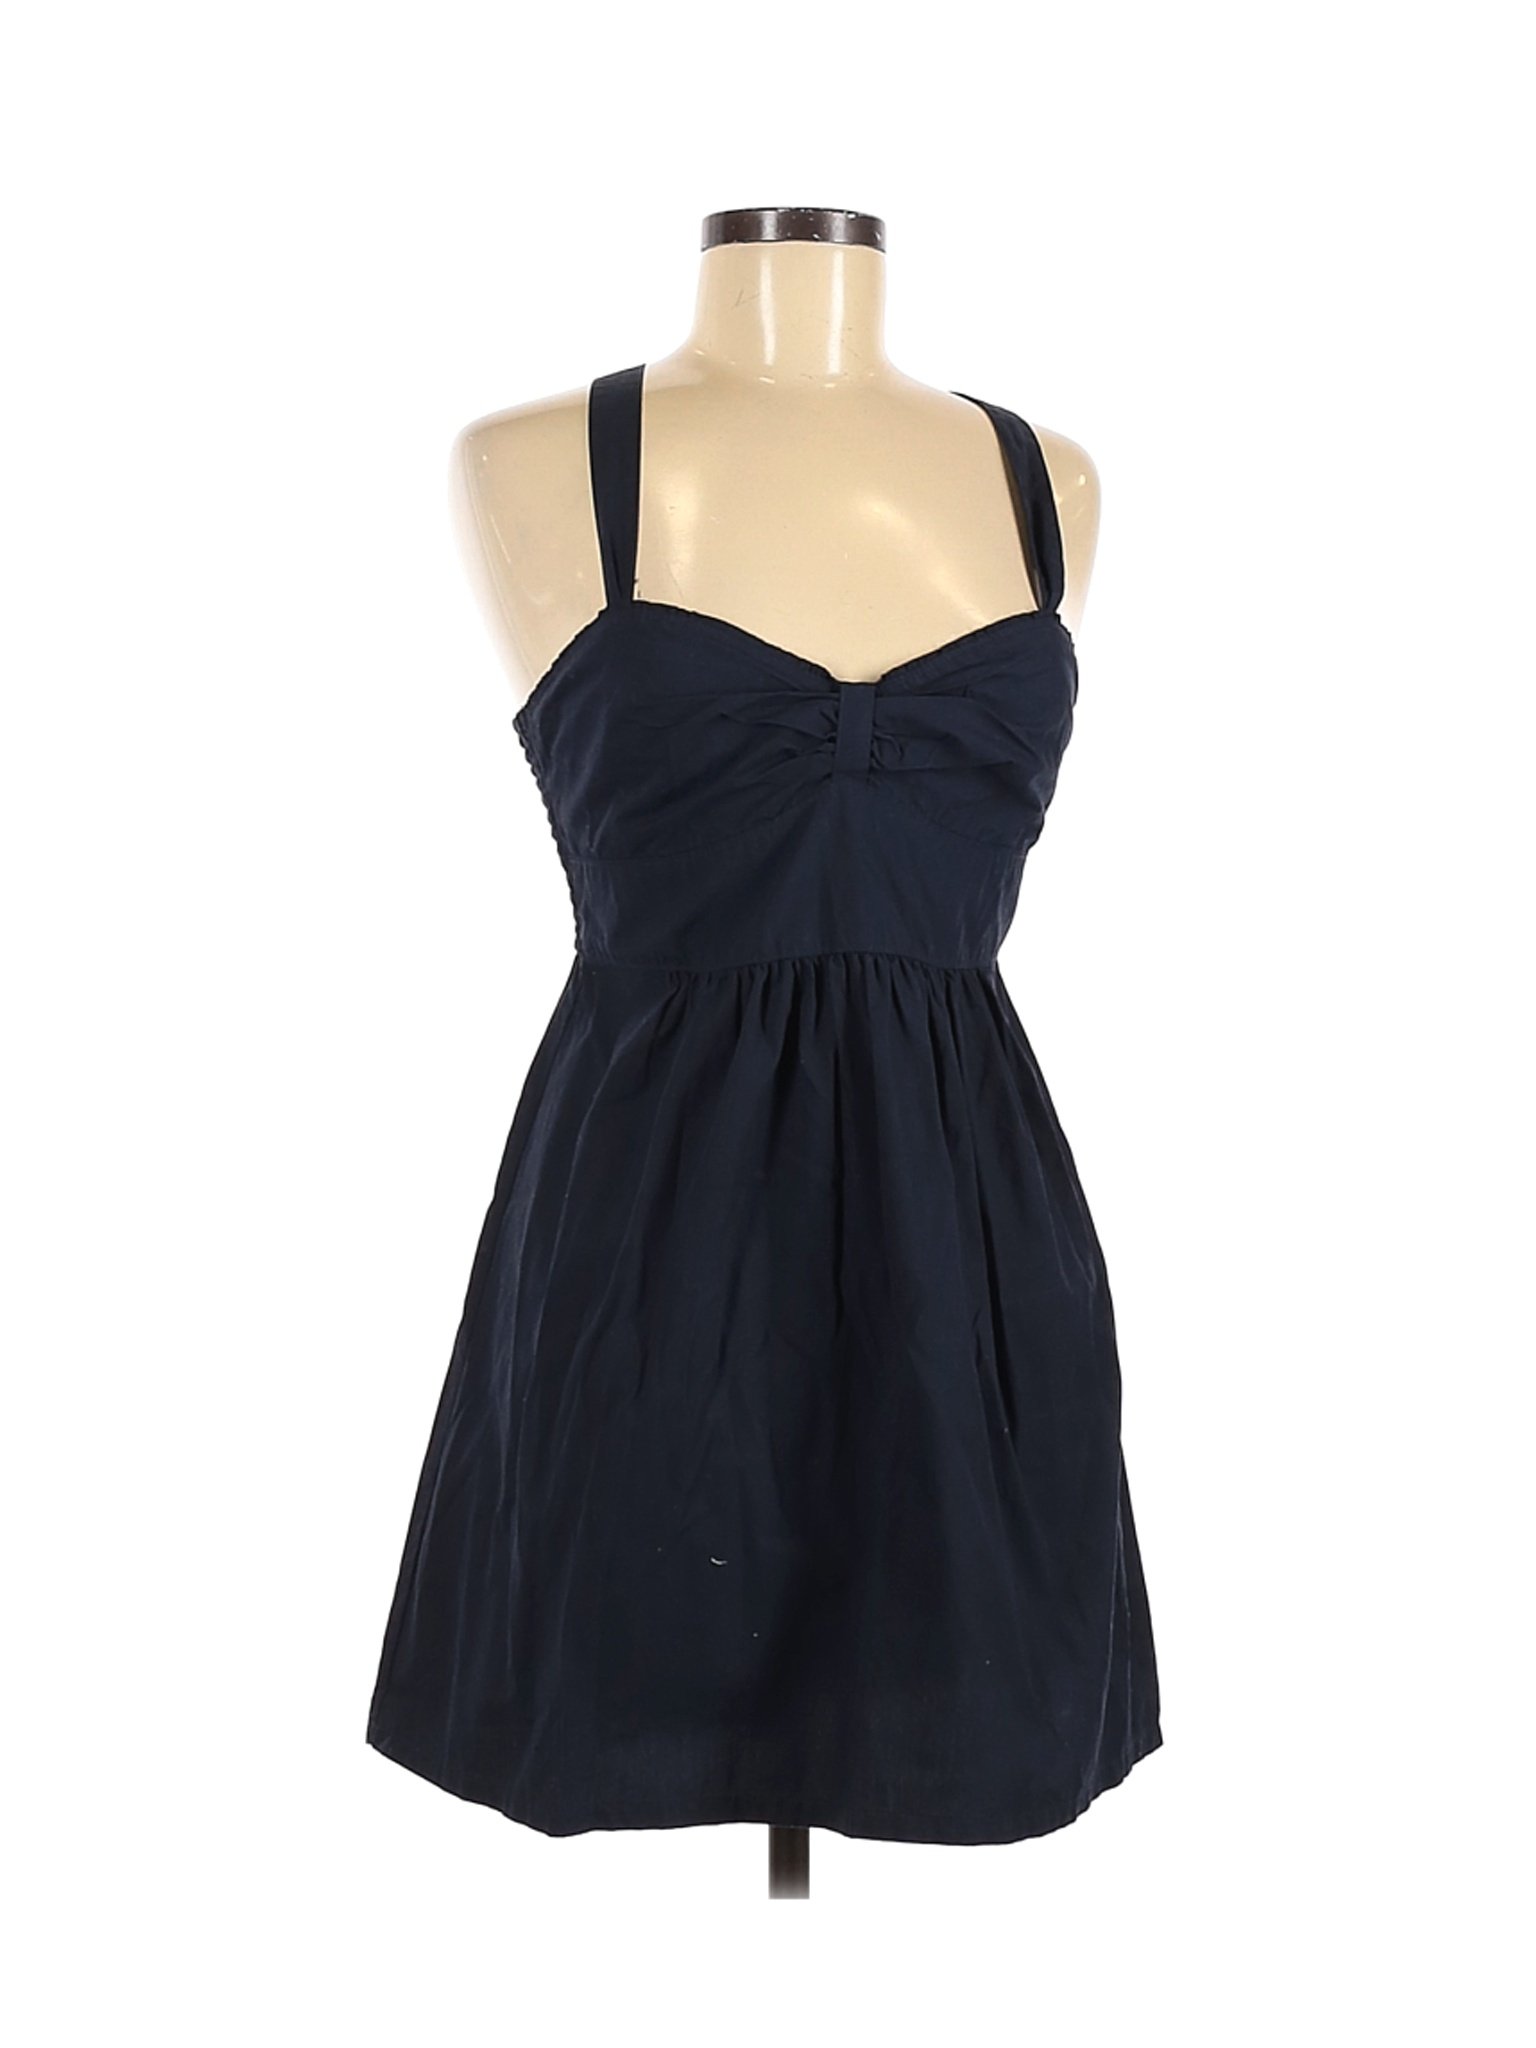 NWT Hollister Women Black Casual Dress M | eBay